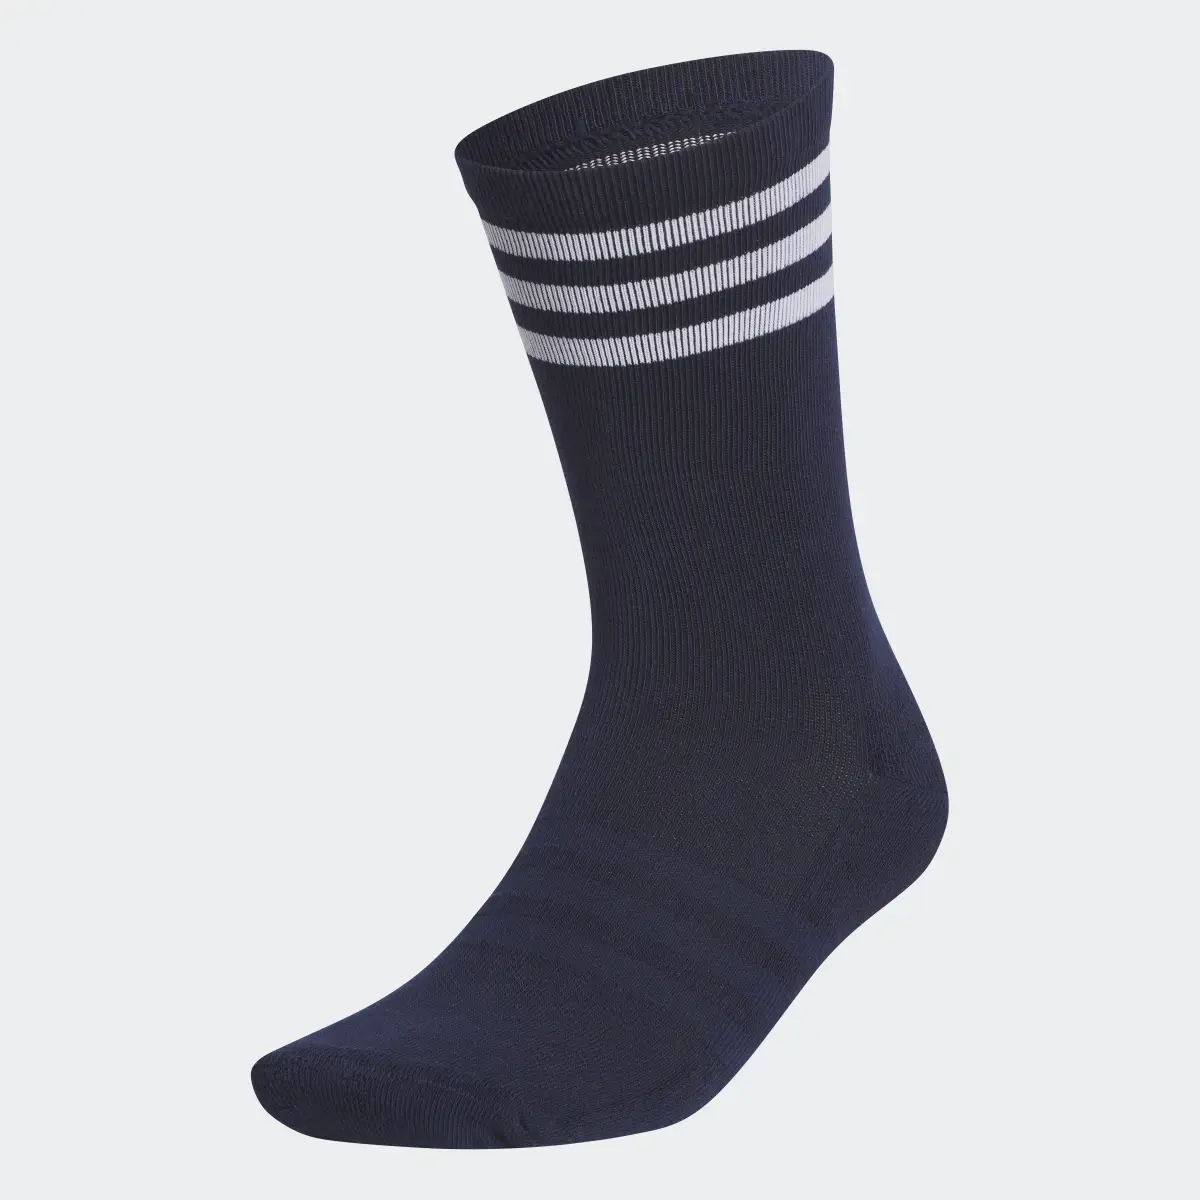 Adidas Basic Crew Golf Socks. 1